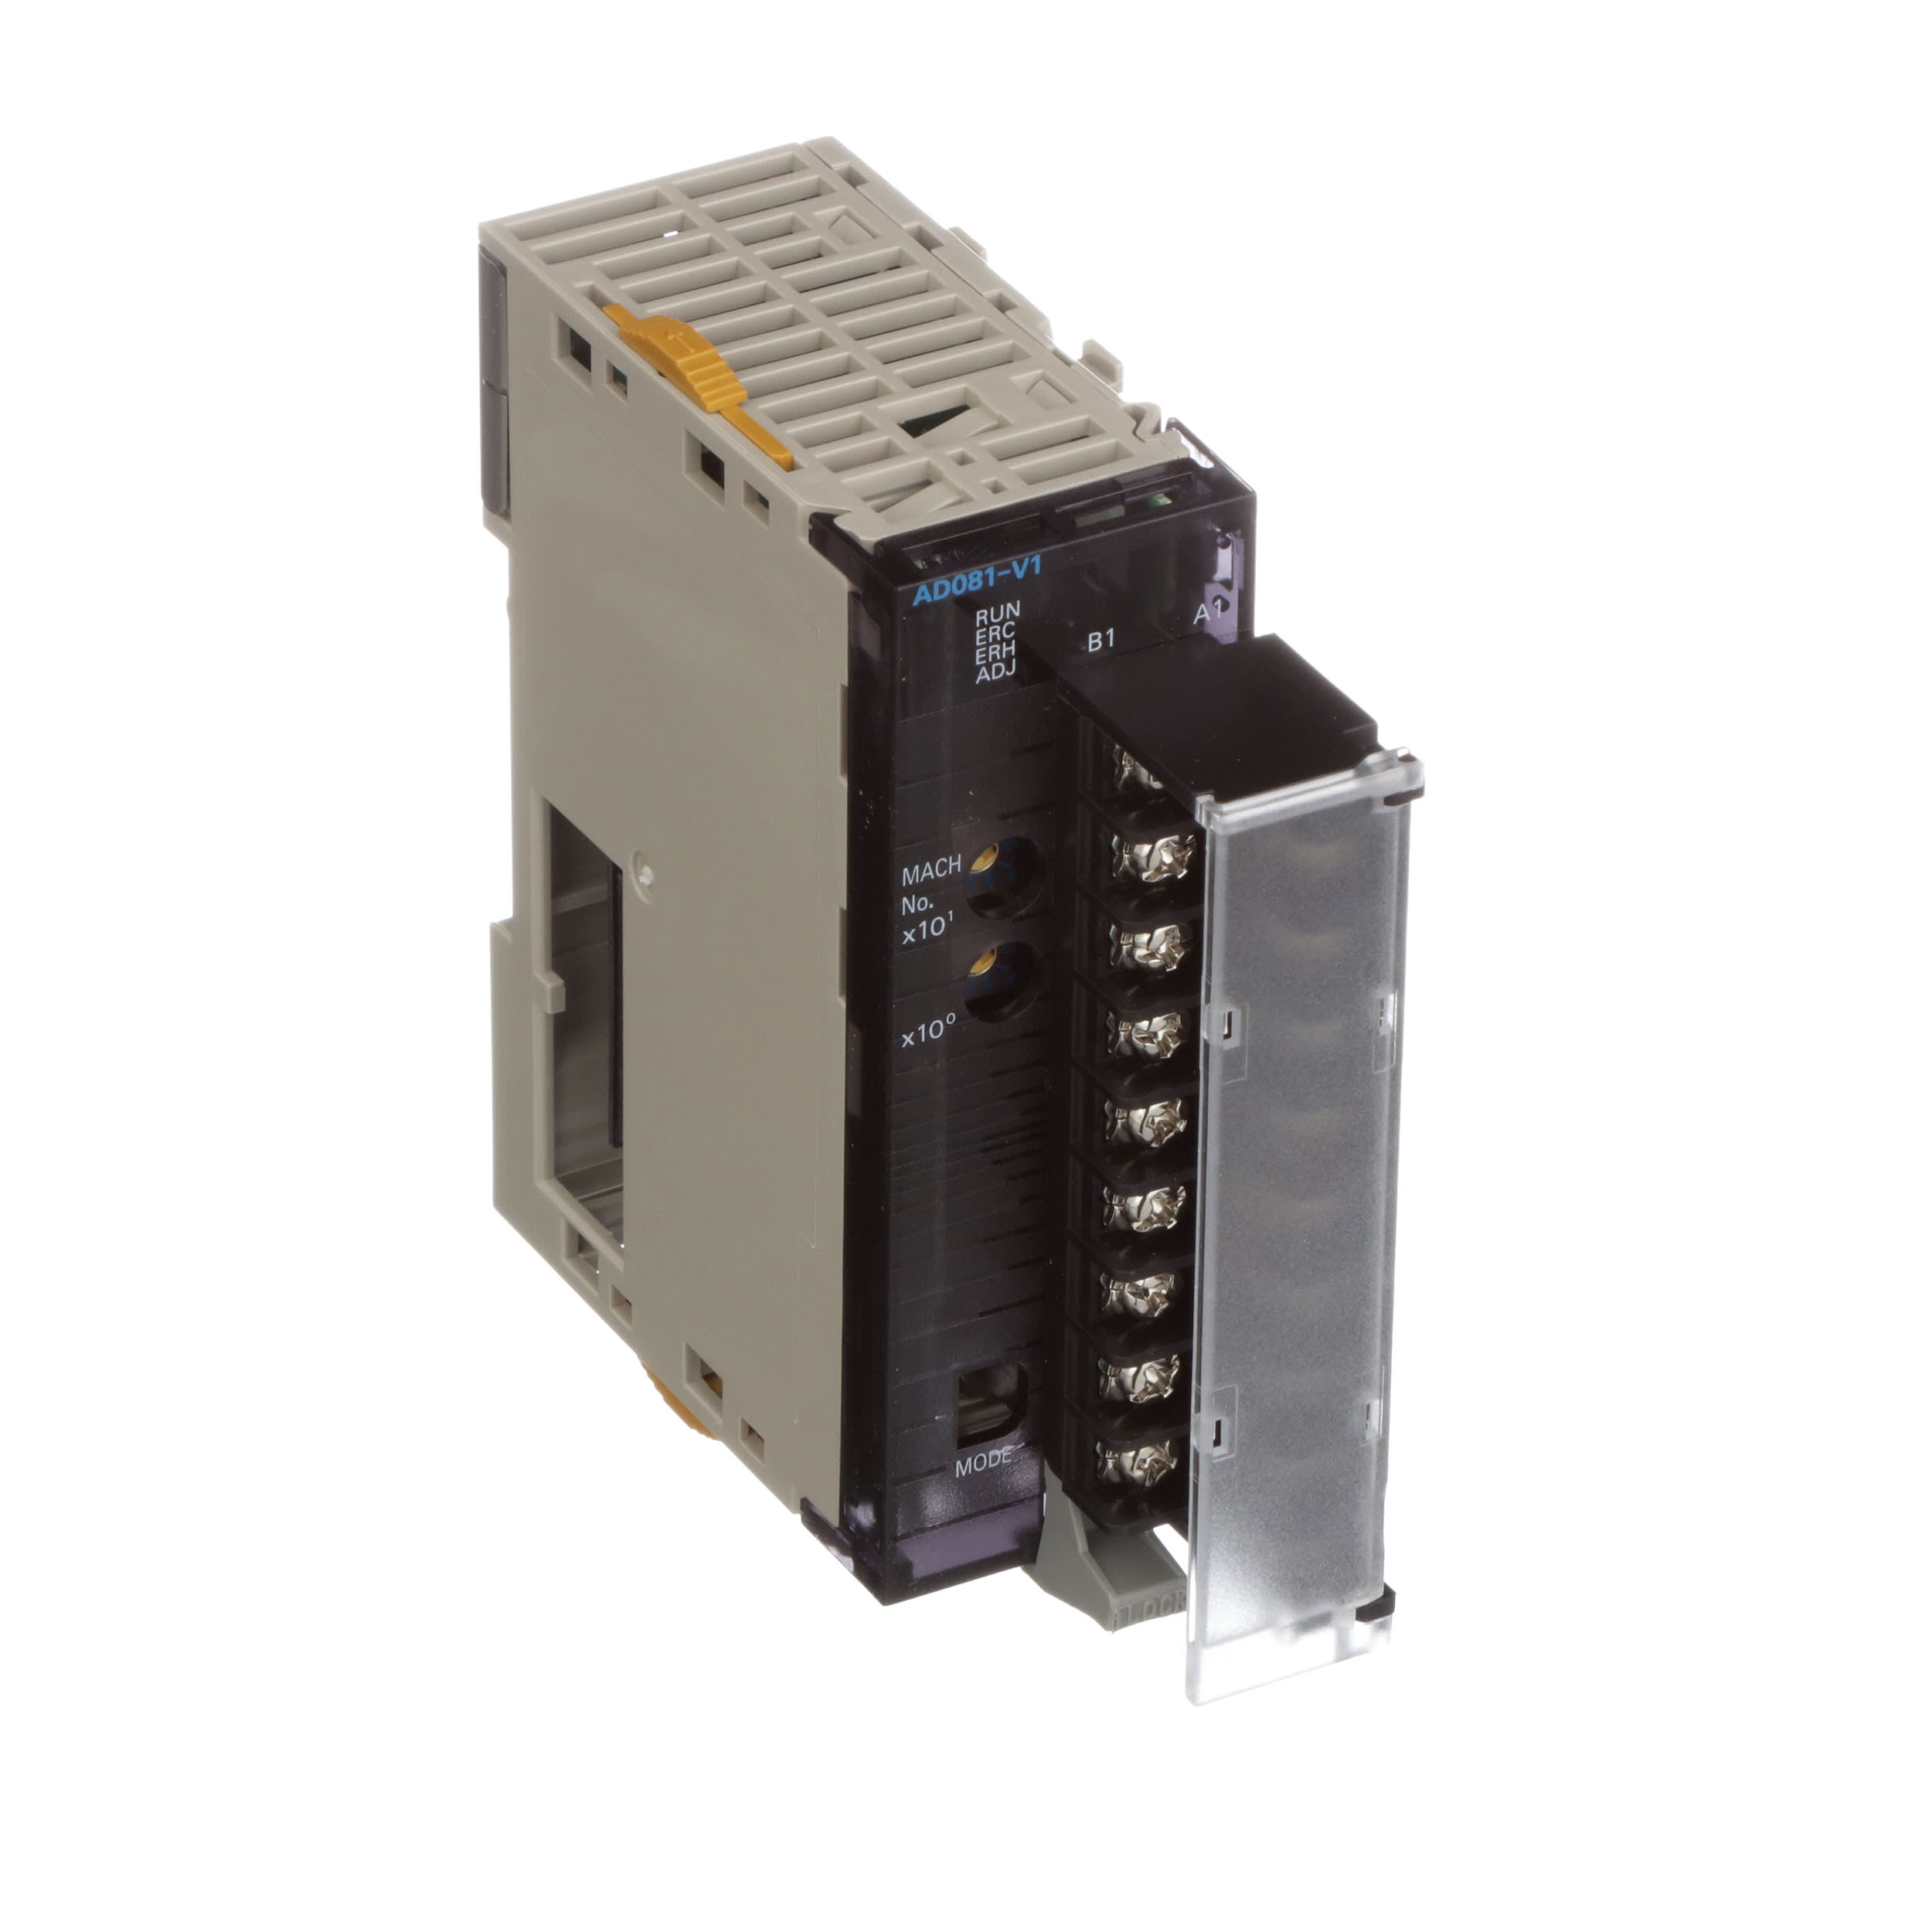 New OMRON CJ1W-AD081-V1 Analog Input Units PLC Module CJ1WAD081V1 Free shipping 